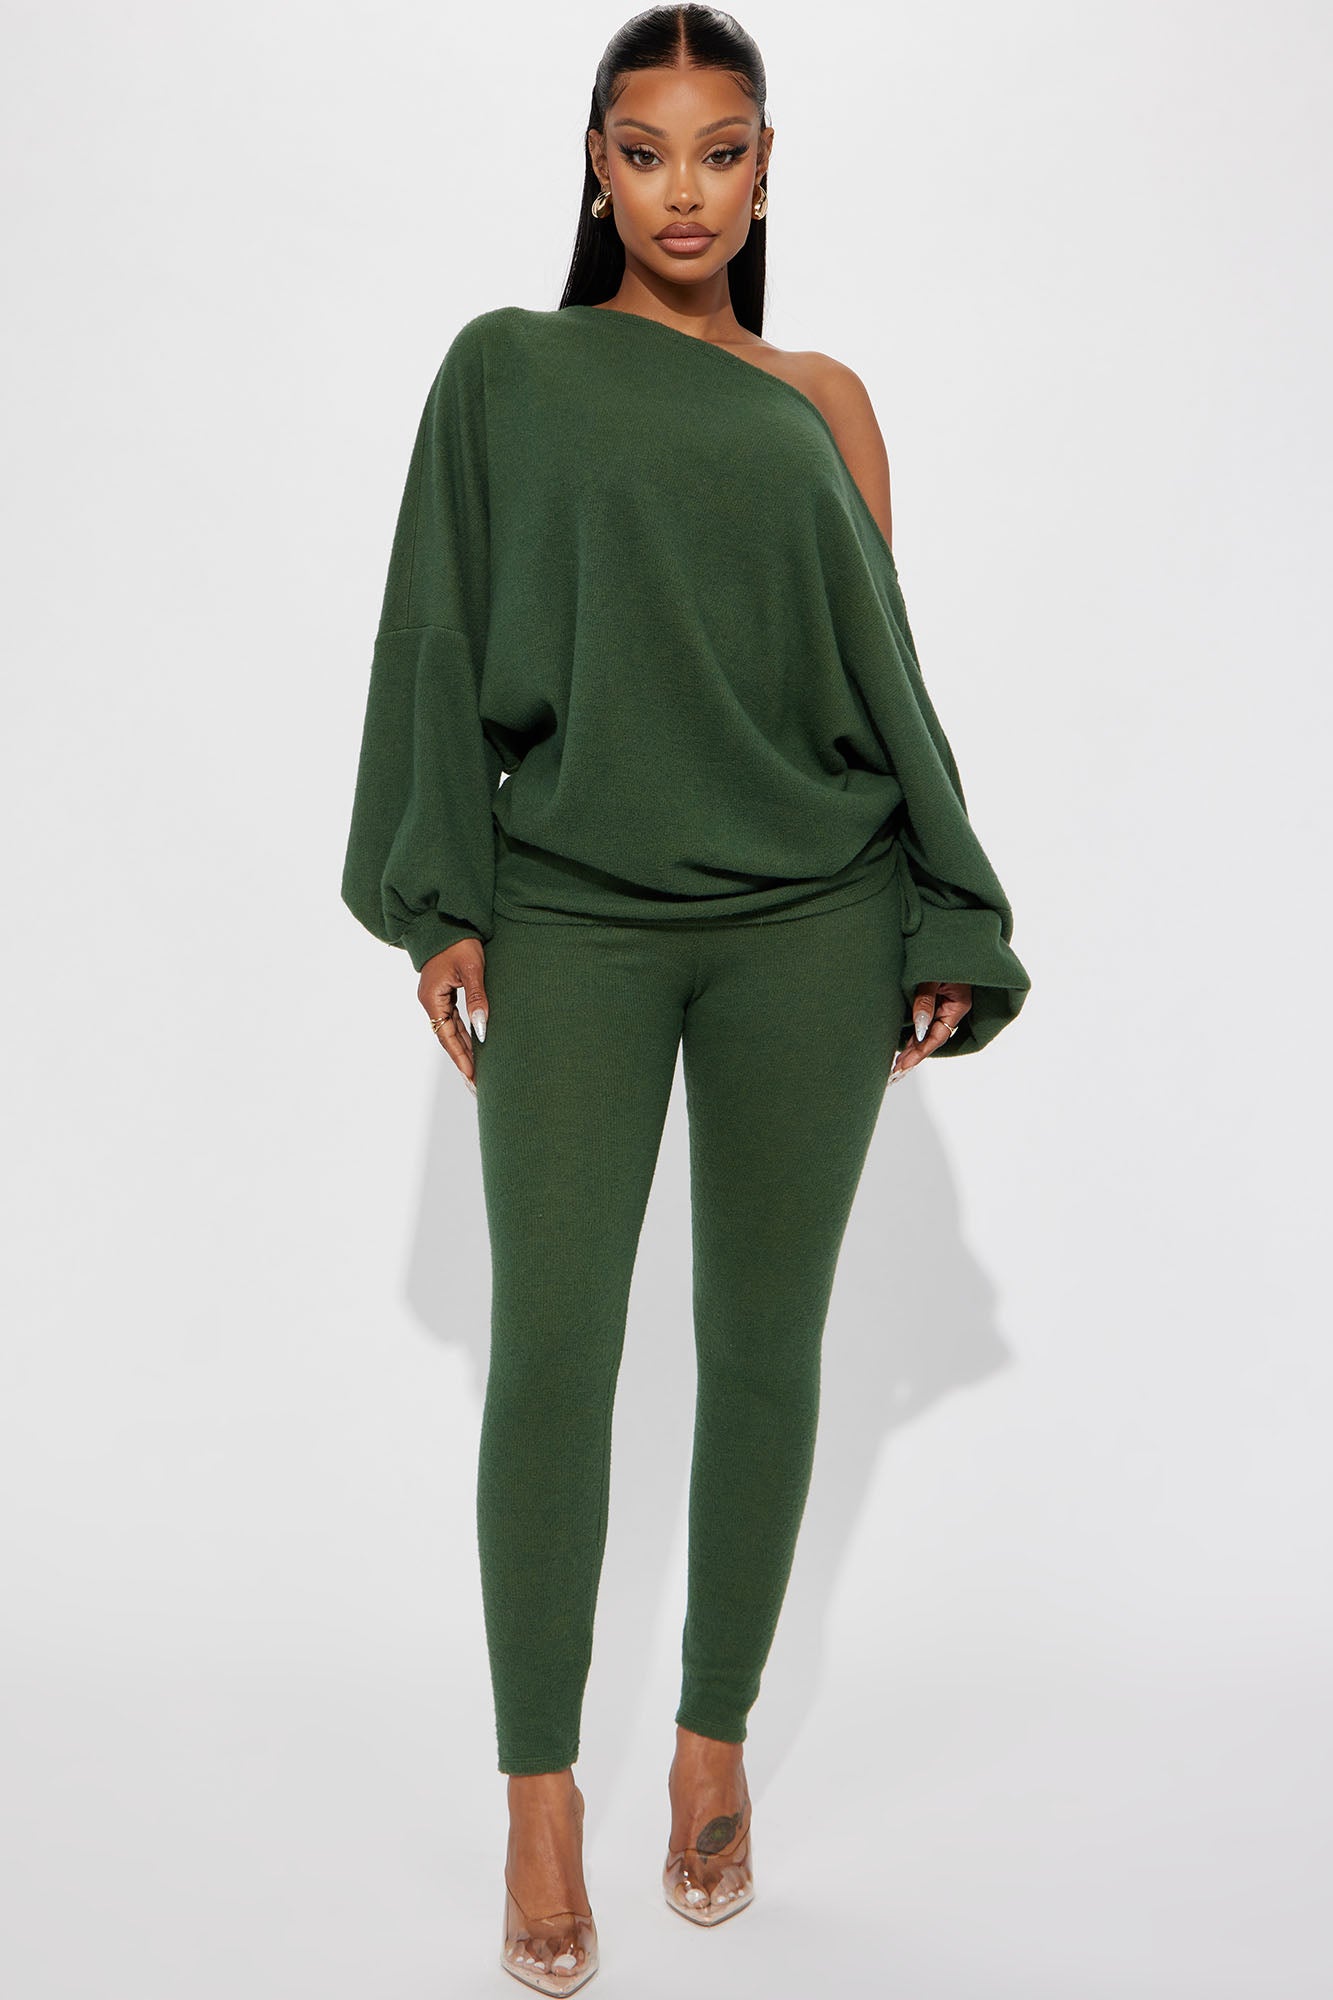 Lounge Vibes Legging Set - Chartreuse, Fashion Nova, Matching Sets